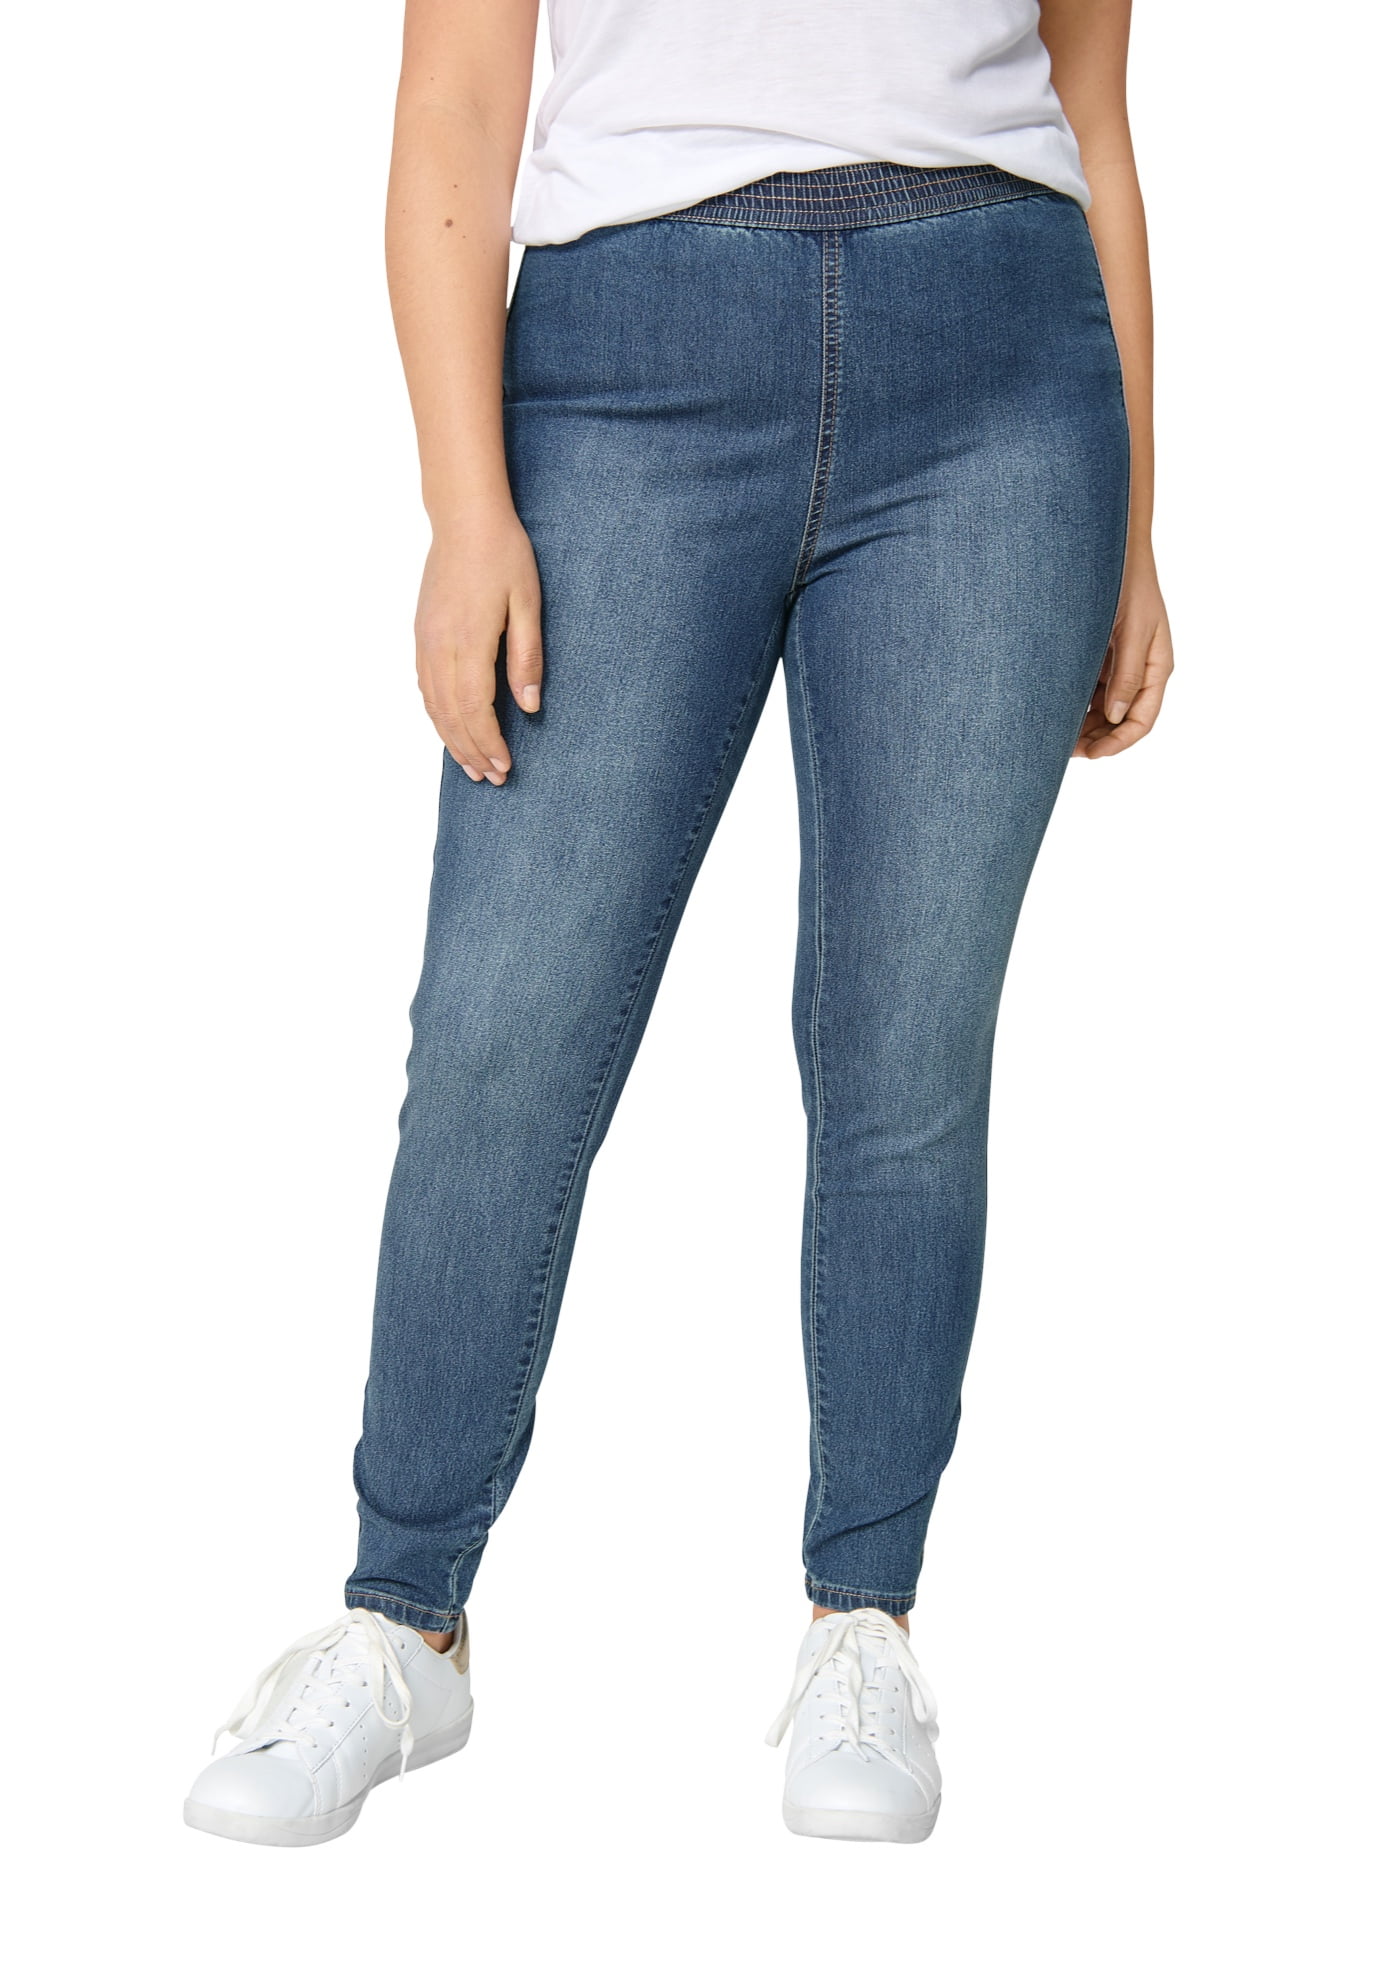 Dyegold Jean Leggings for Women Denim Print Fake Jeans Look Like Leggings  Sexy Stretchy High Waist Slim Skinny Jeggings Capri 